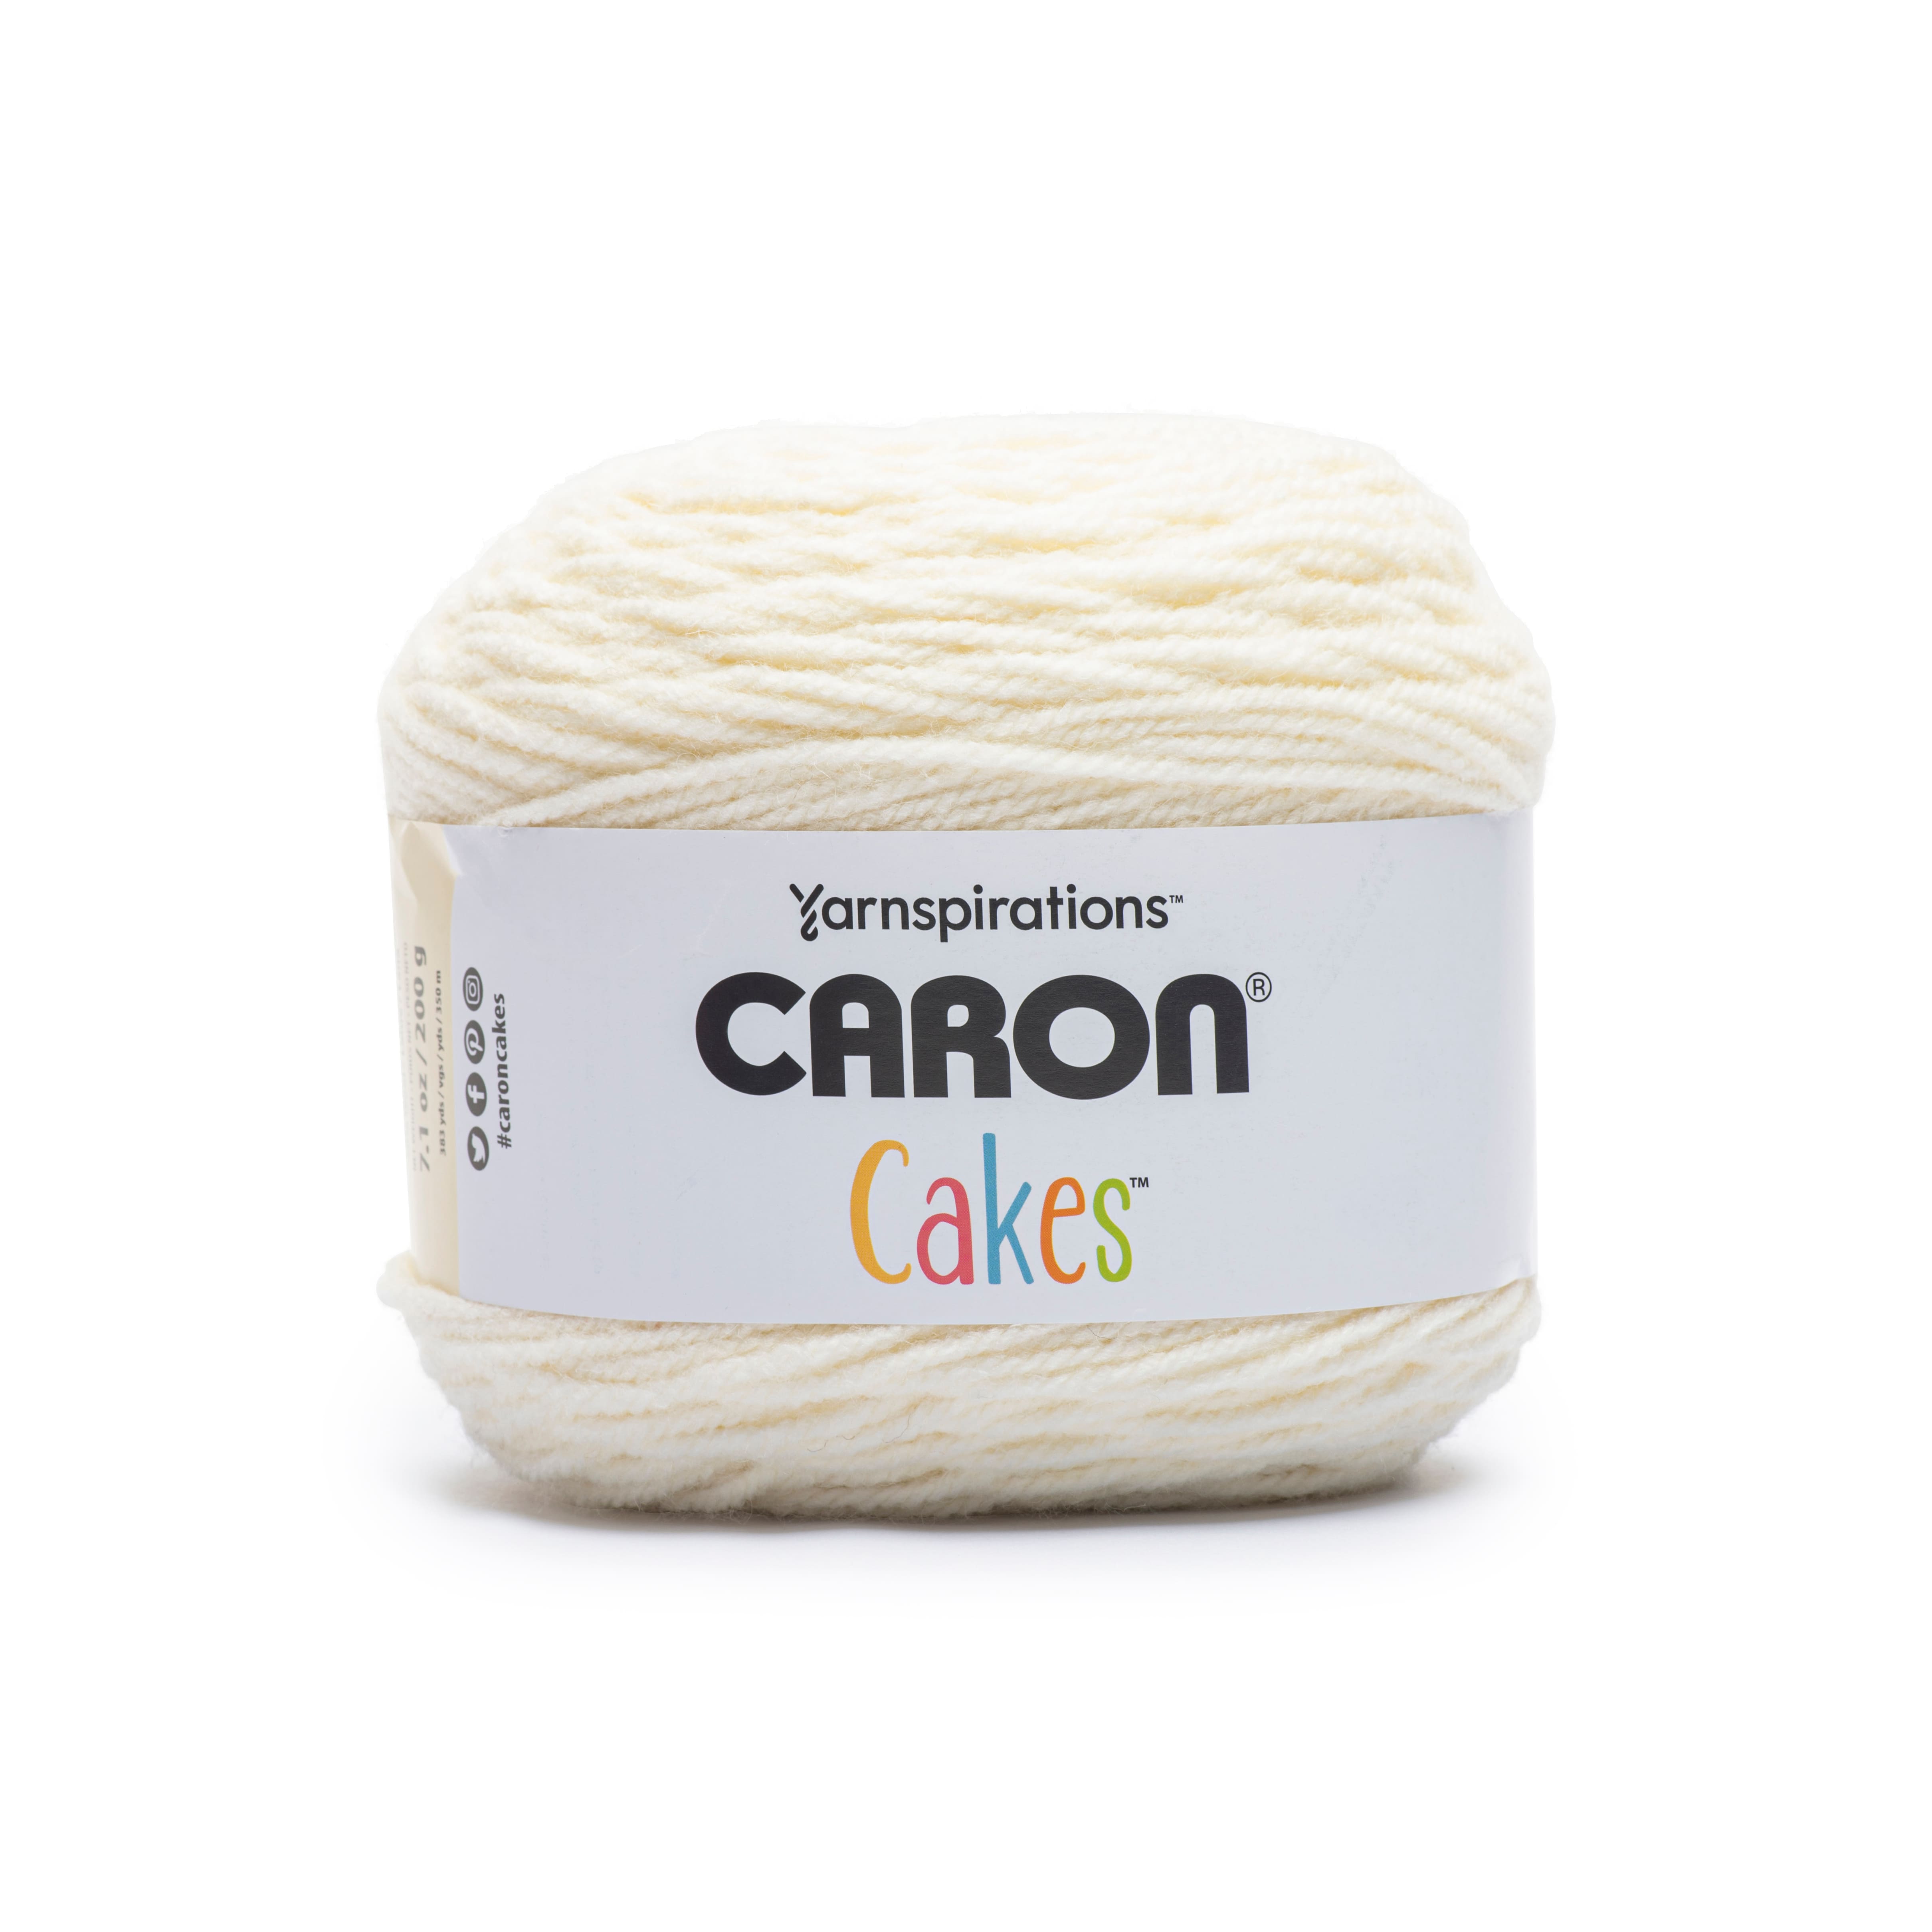 Caron Anniversary Cakes * Micheals Yarn Haul * Craft Smart Yarn * My Pet  Yarn 